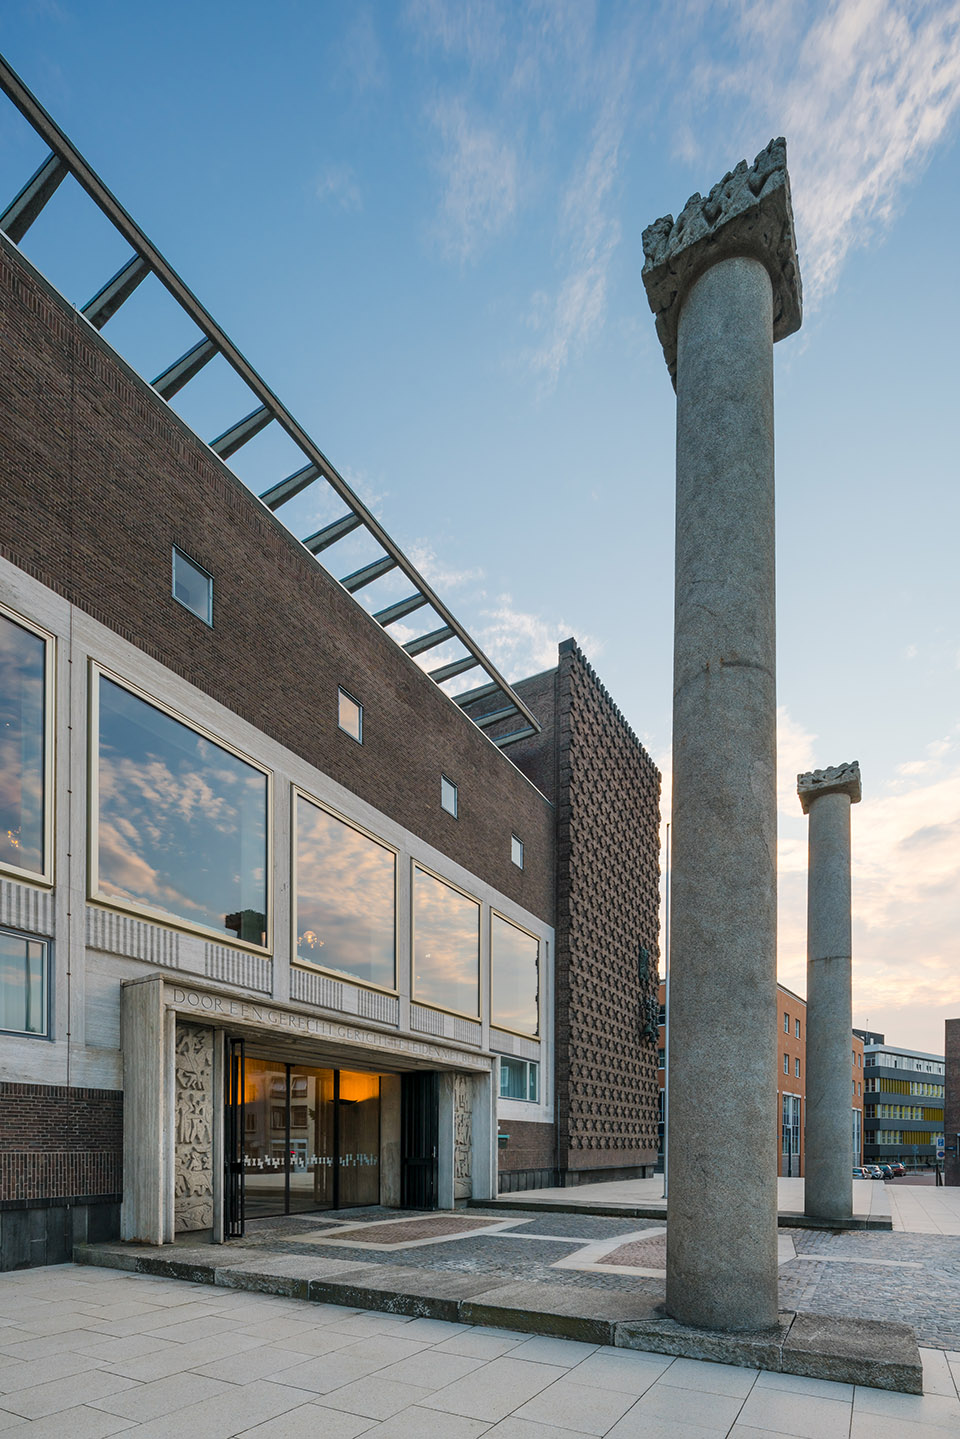 Gelderland省政厅，荷兰/新与旧，历史与创意、厚重与轻盈-70